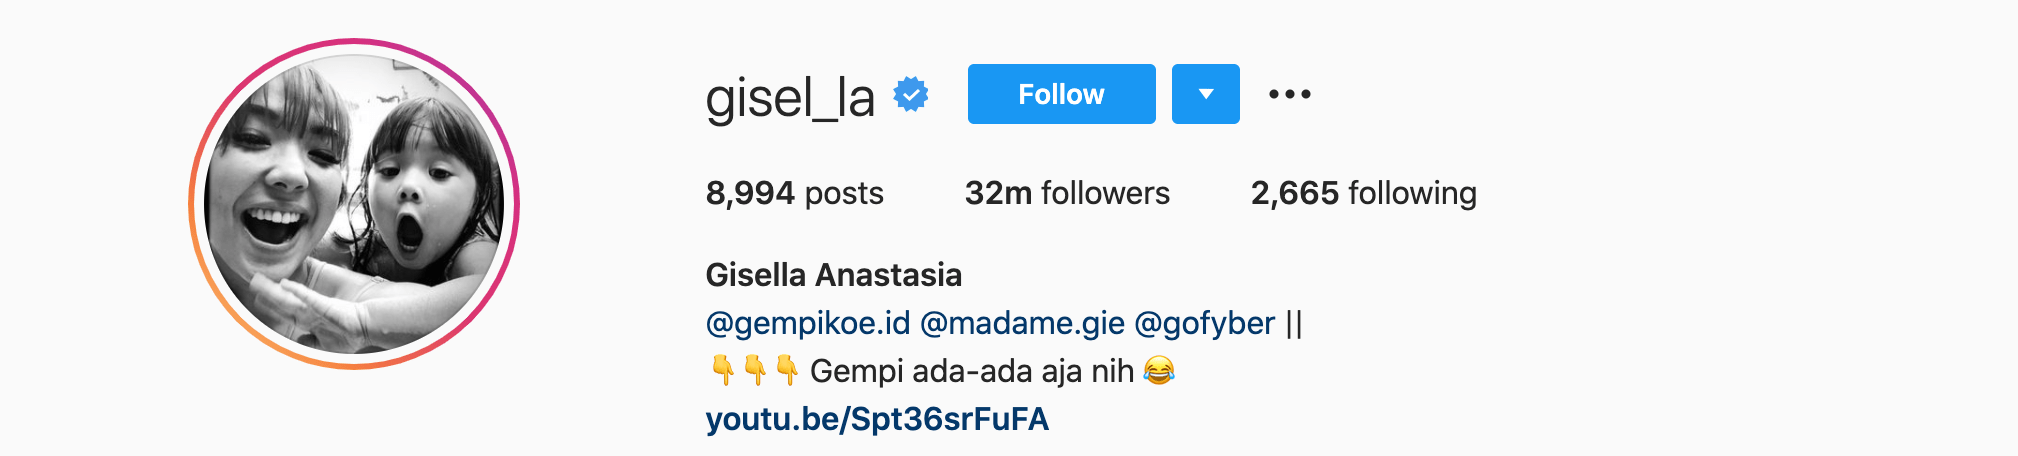 Top Instagram Influencers - GISELLA ANASTASIA